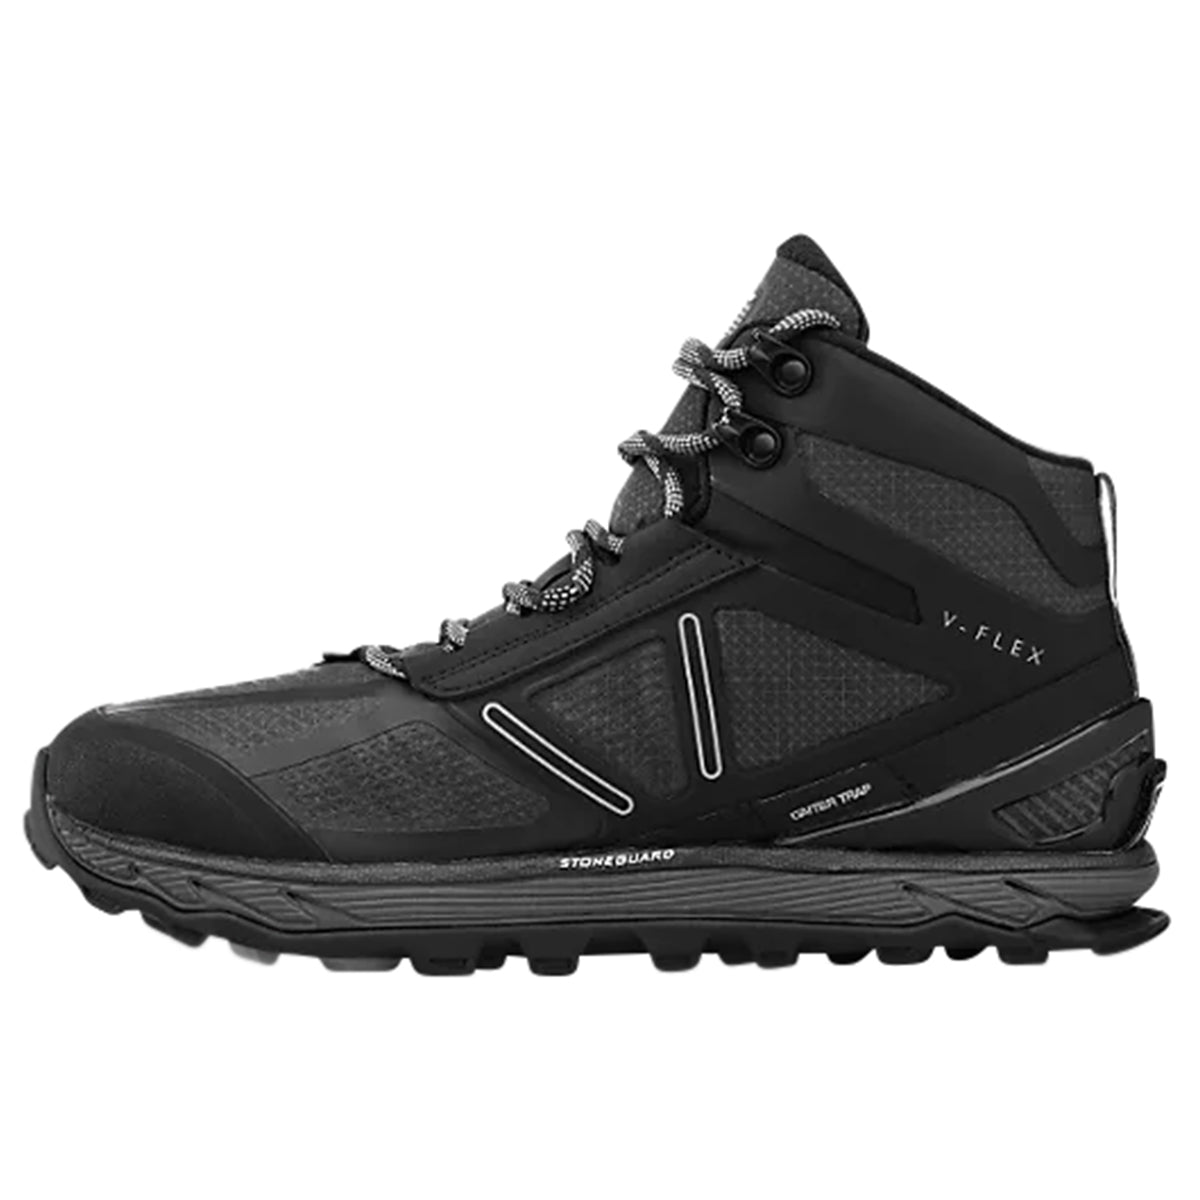 Altra Lone Peak 4 Mid RSM Boot by Altra | Footwear - goHUNT Shop